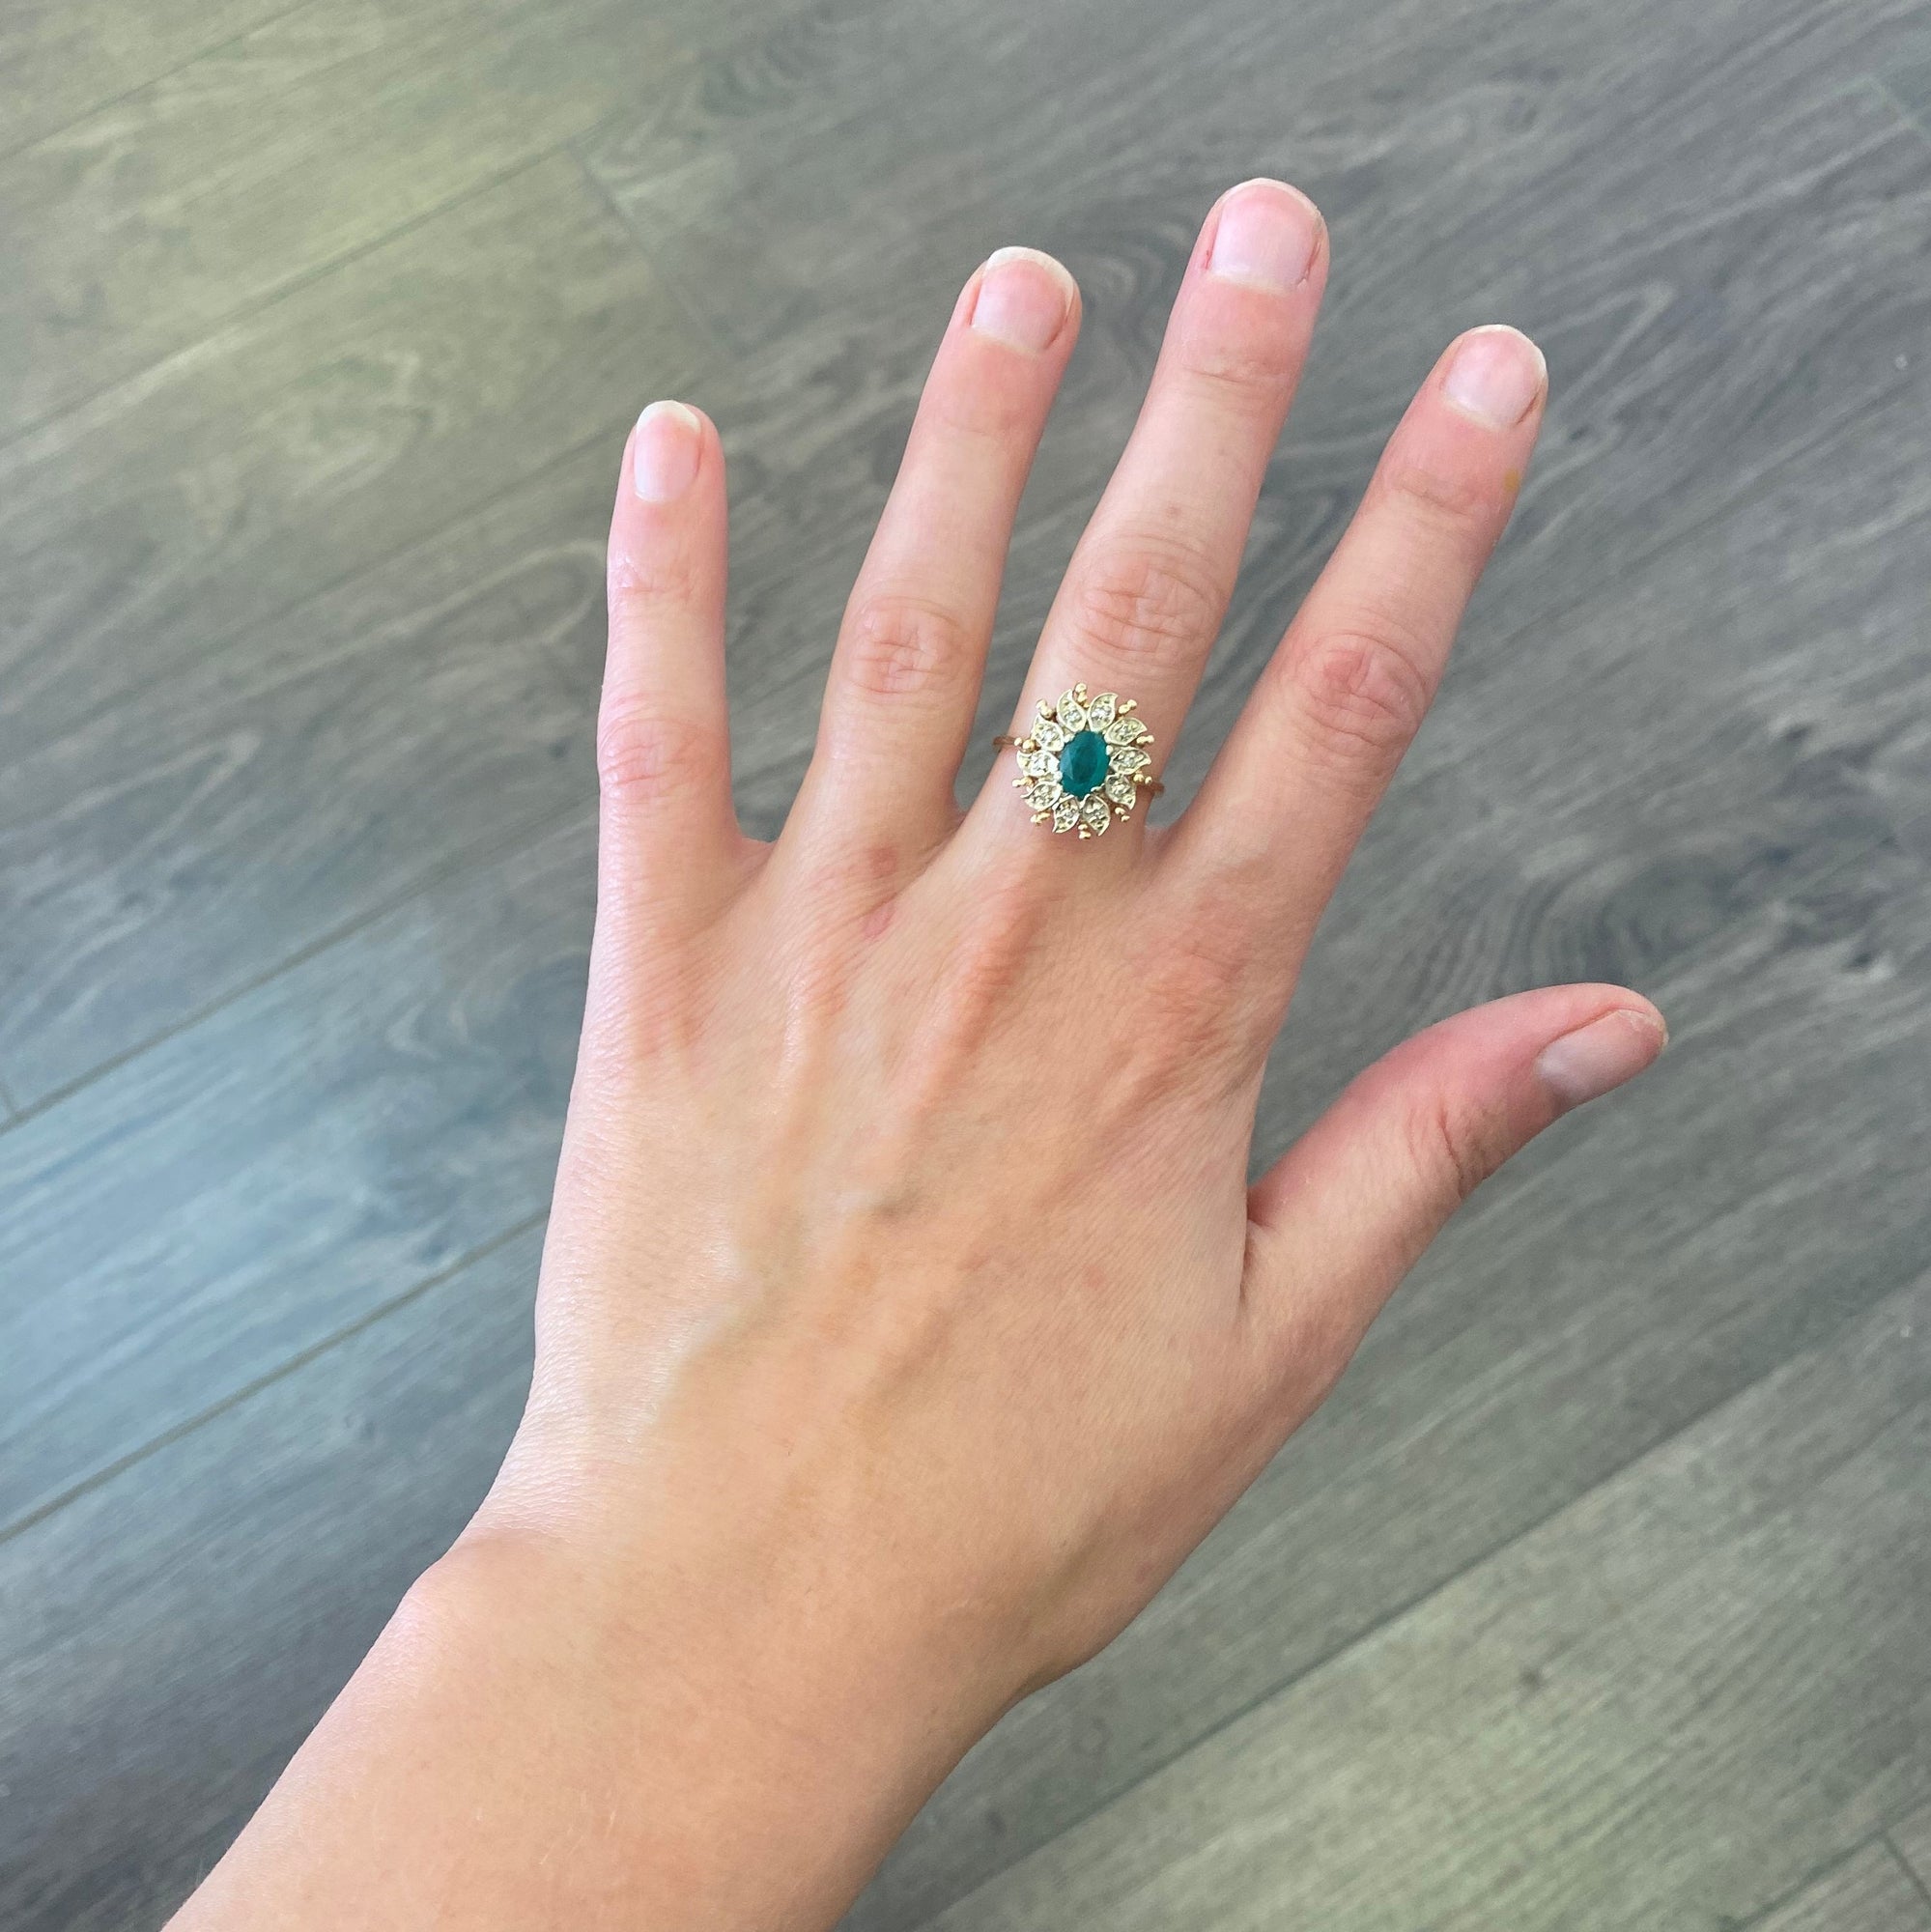 Courtship' Floral Diamond Halo Emerald Ring Circa 1940s | 0.12ctw, 0.55ct | SZ 8 |